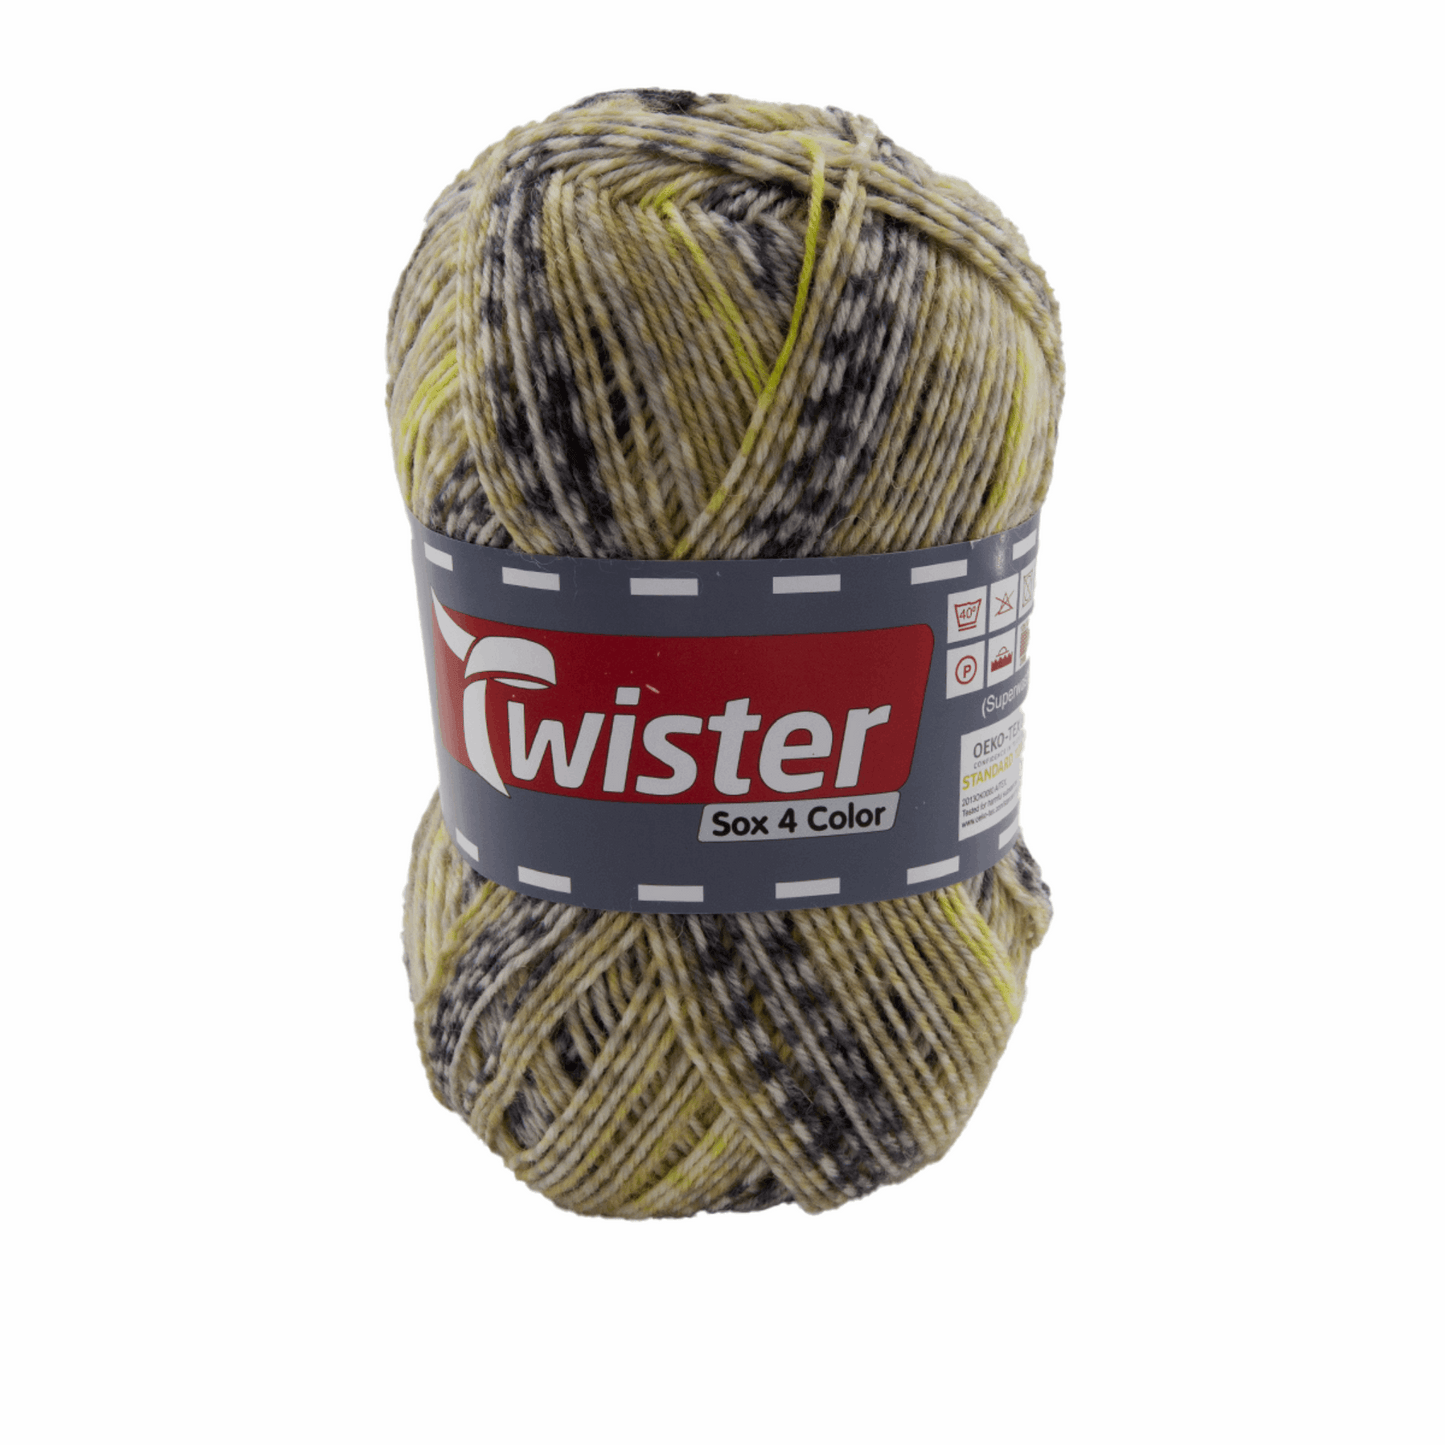 Twister Sox4 Color superwash, gelb schwarz grau, 98306, Farbe 827